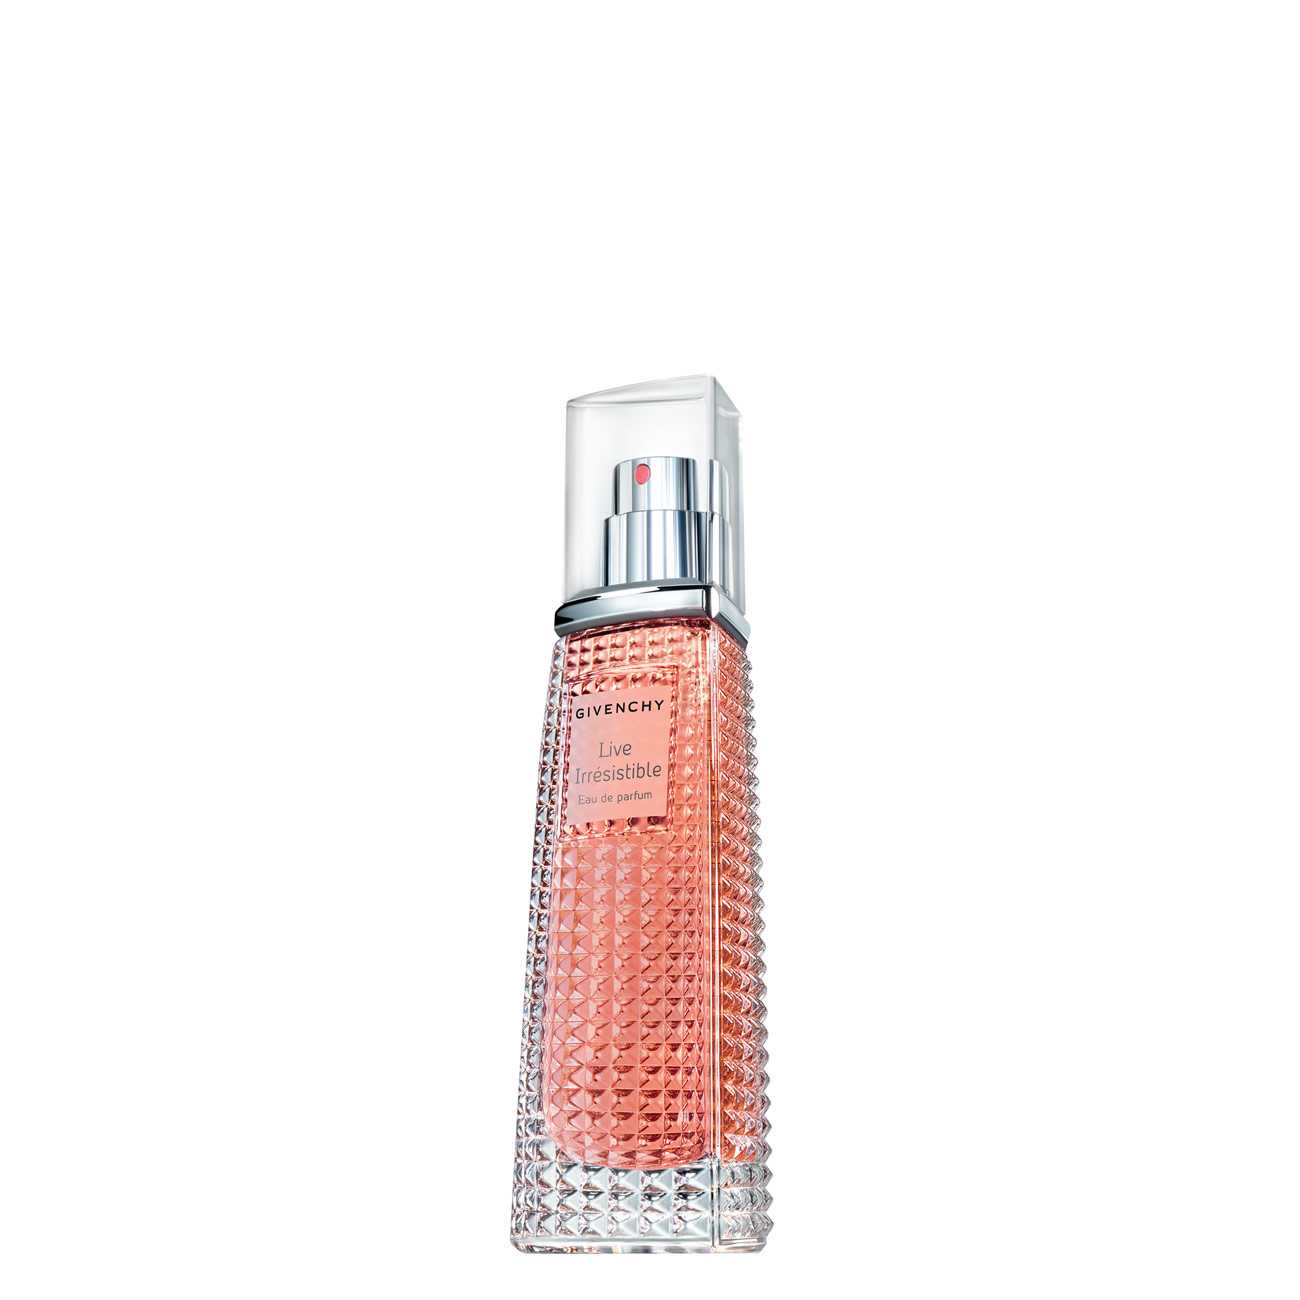 Apa de Parfum Givenchy LIVE IRRESISTIBLE 40ml cu comanda online